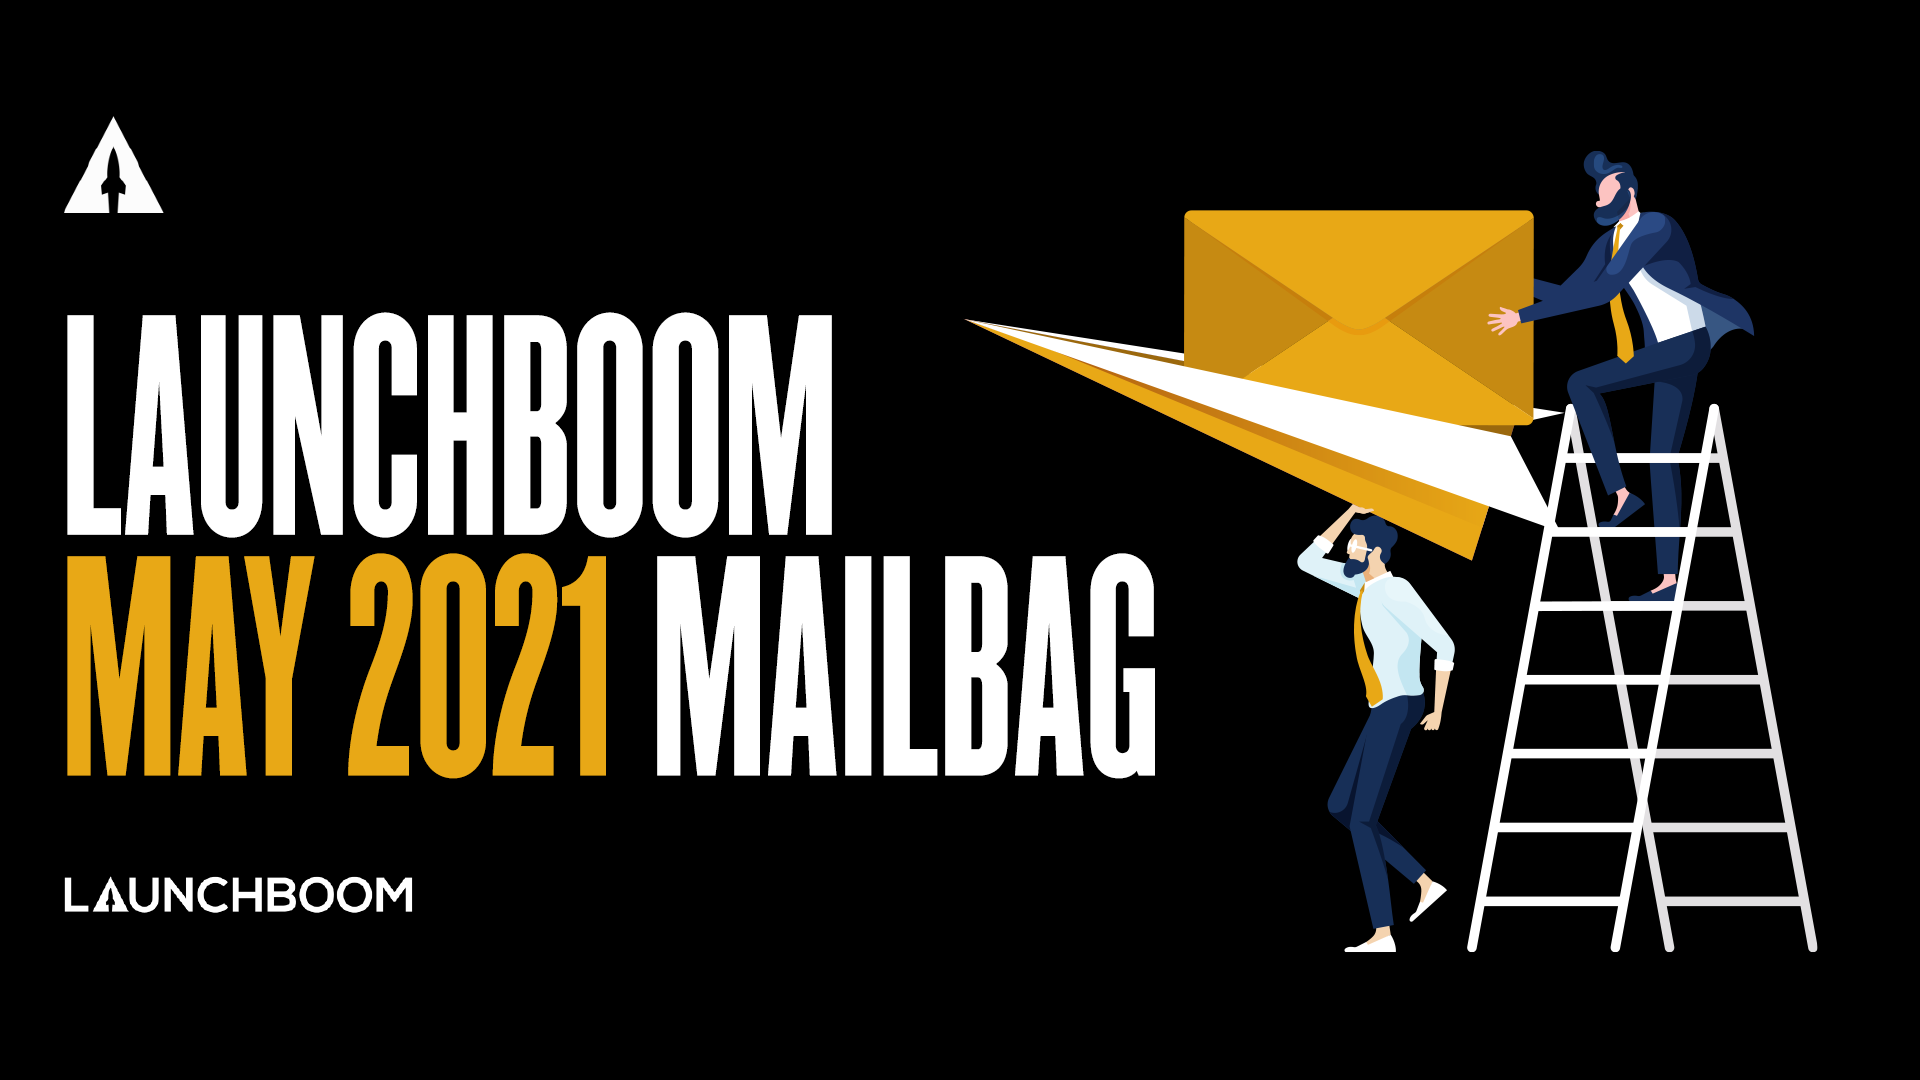 LaunchBoom May 2021 Mailbag